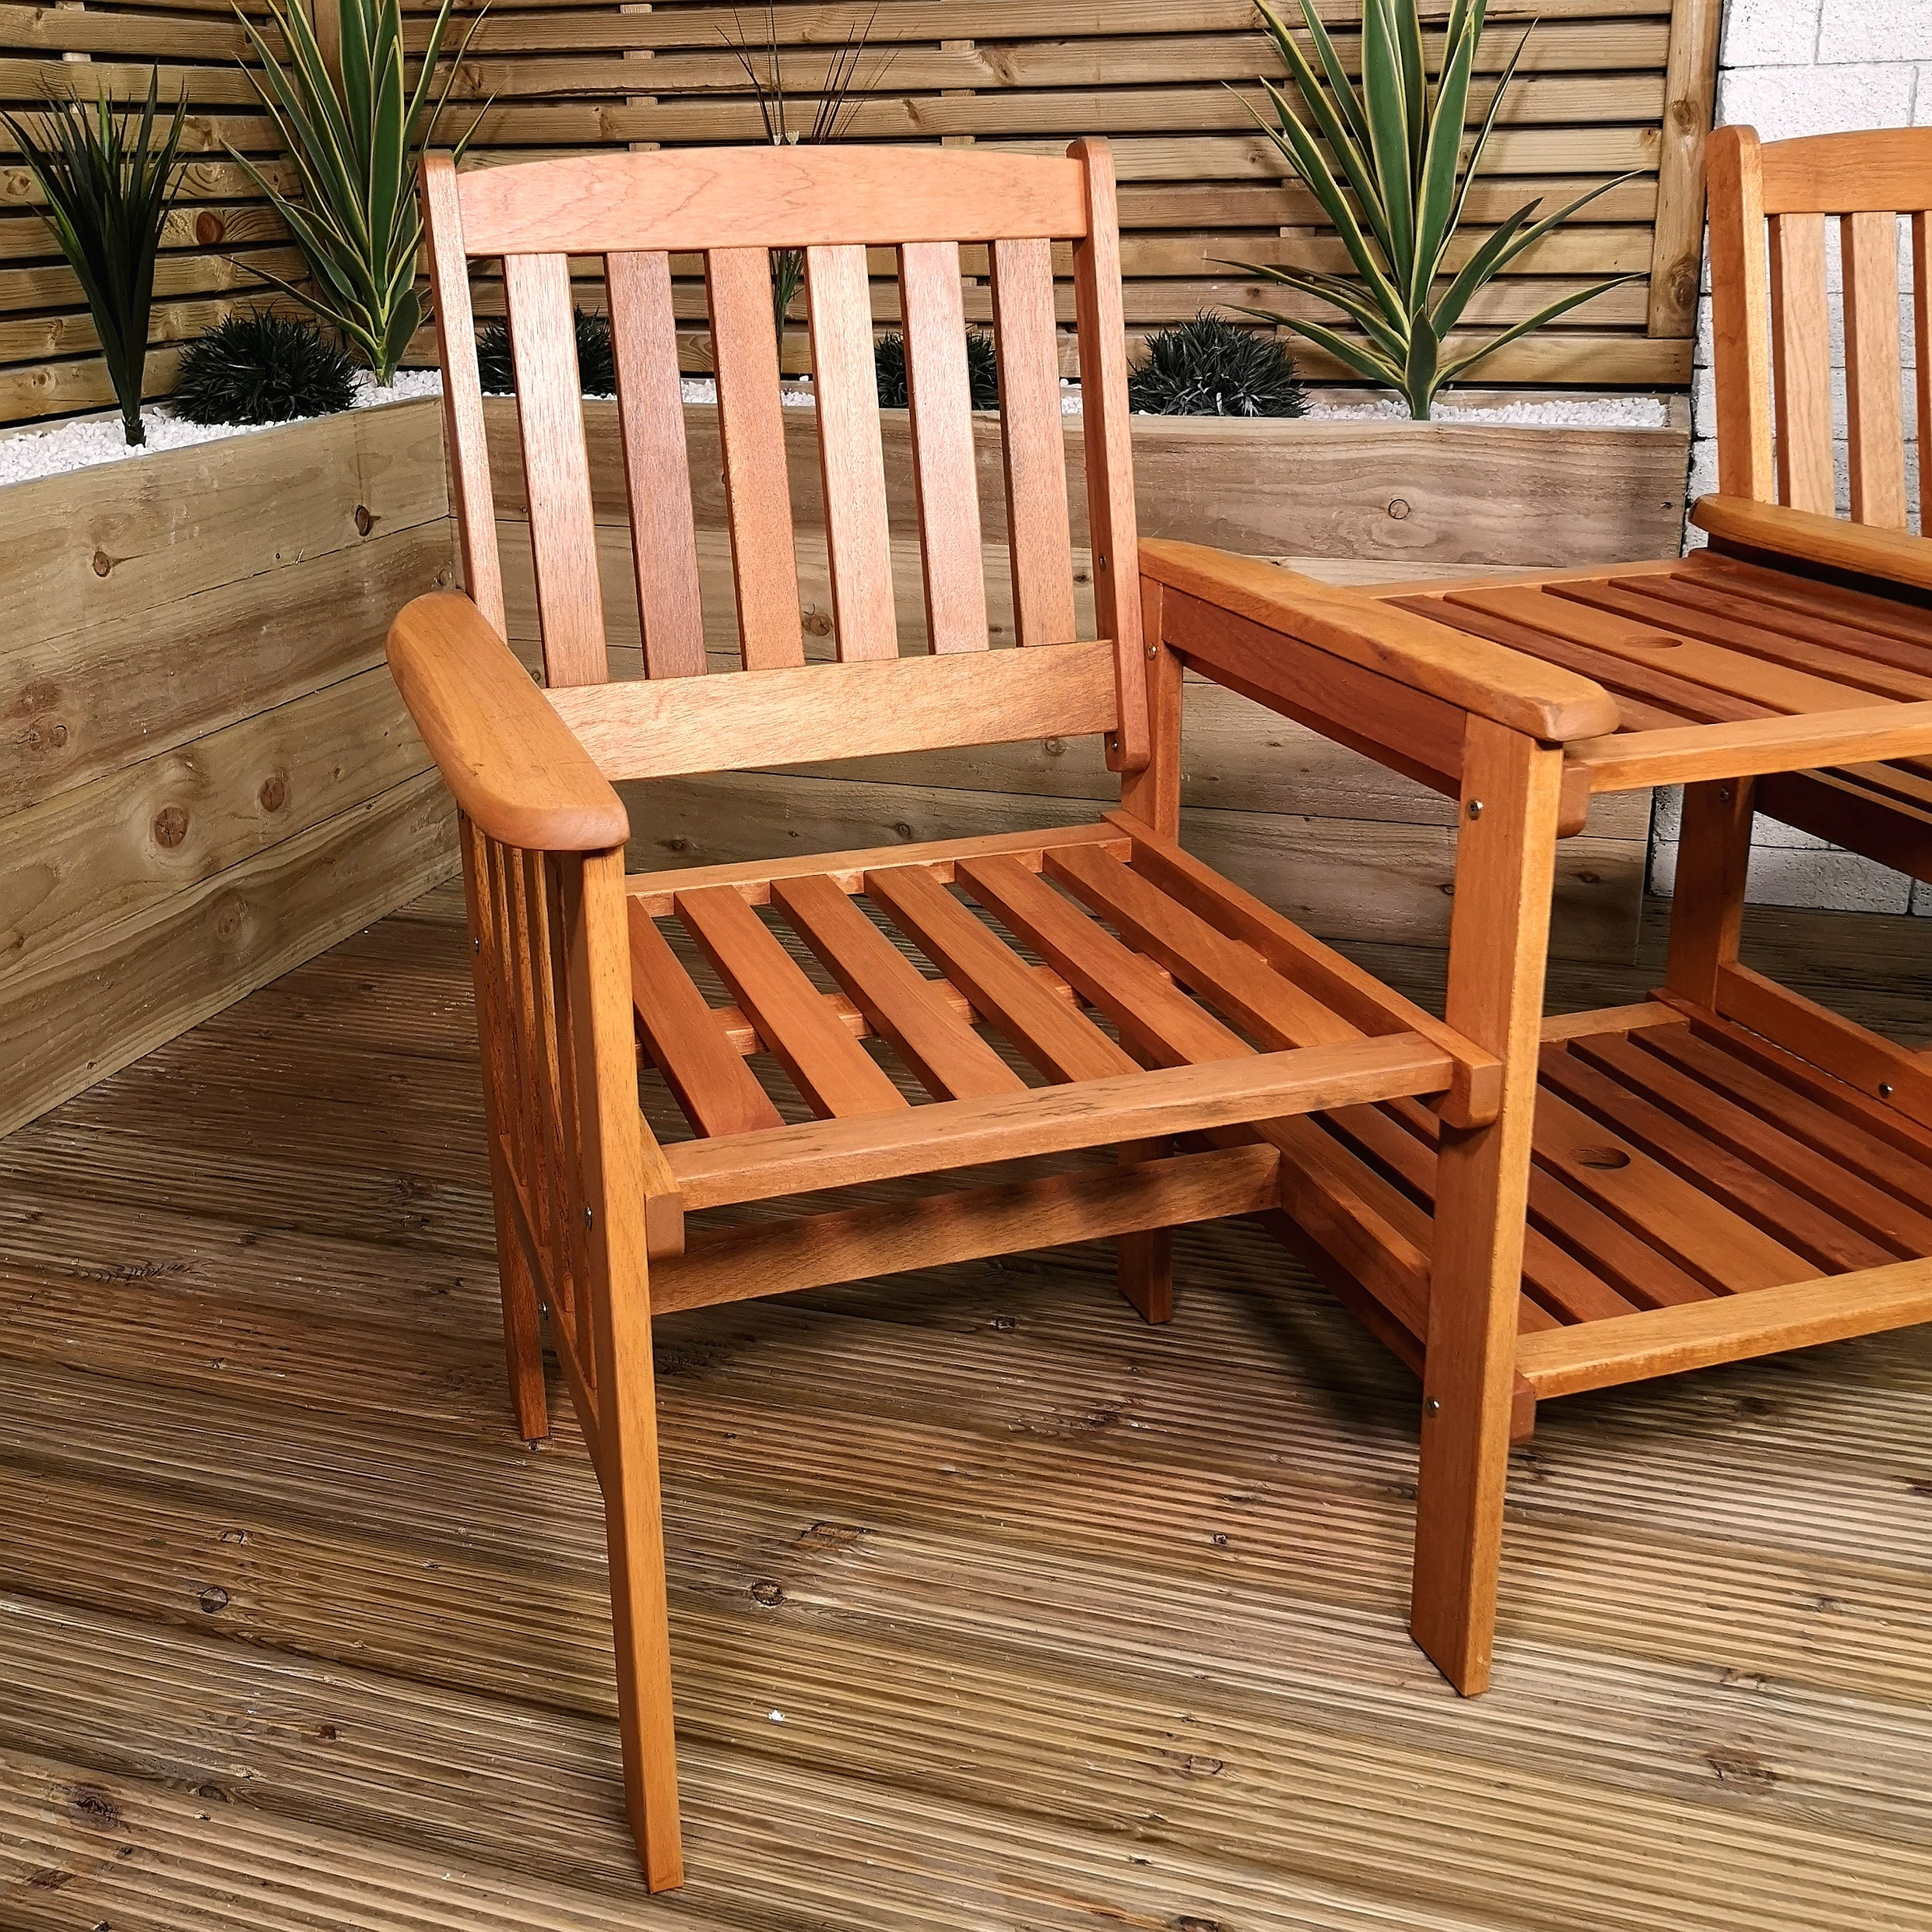 2 Person Wooden Garden Bench Love Seat & Table Garden Furniture